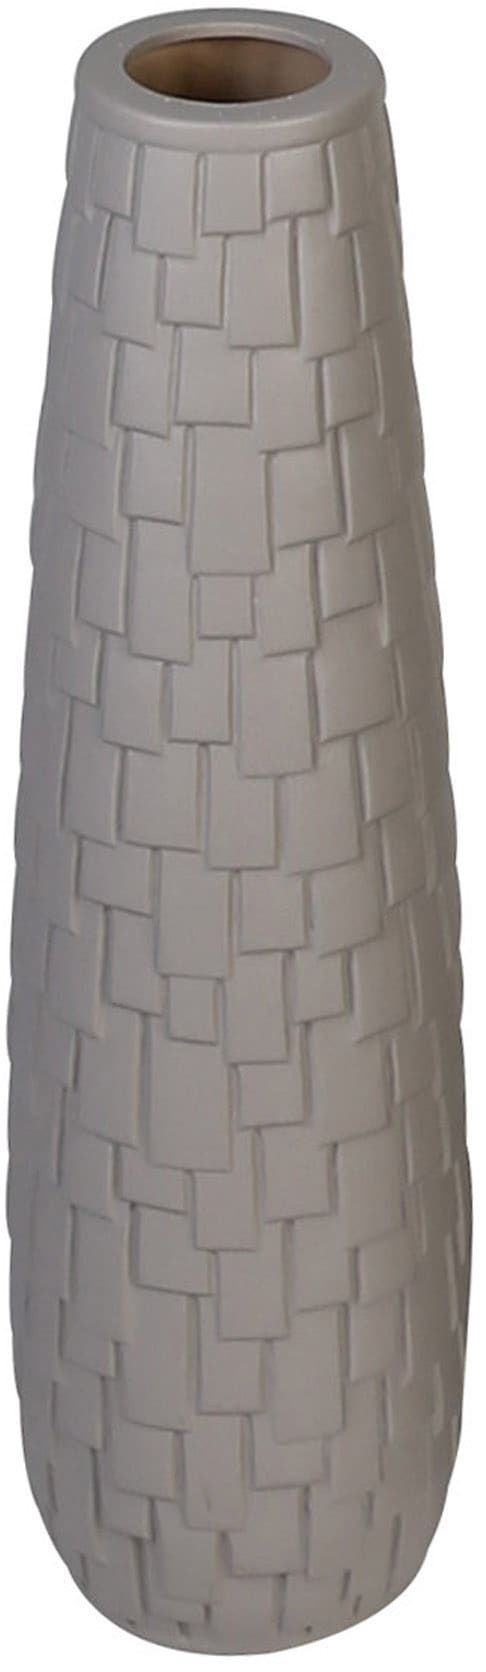 GILDE Bodenvase »Brick«, (1 St.), Keramik, matt, dekorative Riemchen-Struktur, 57 cm hoch